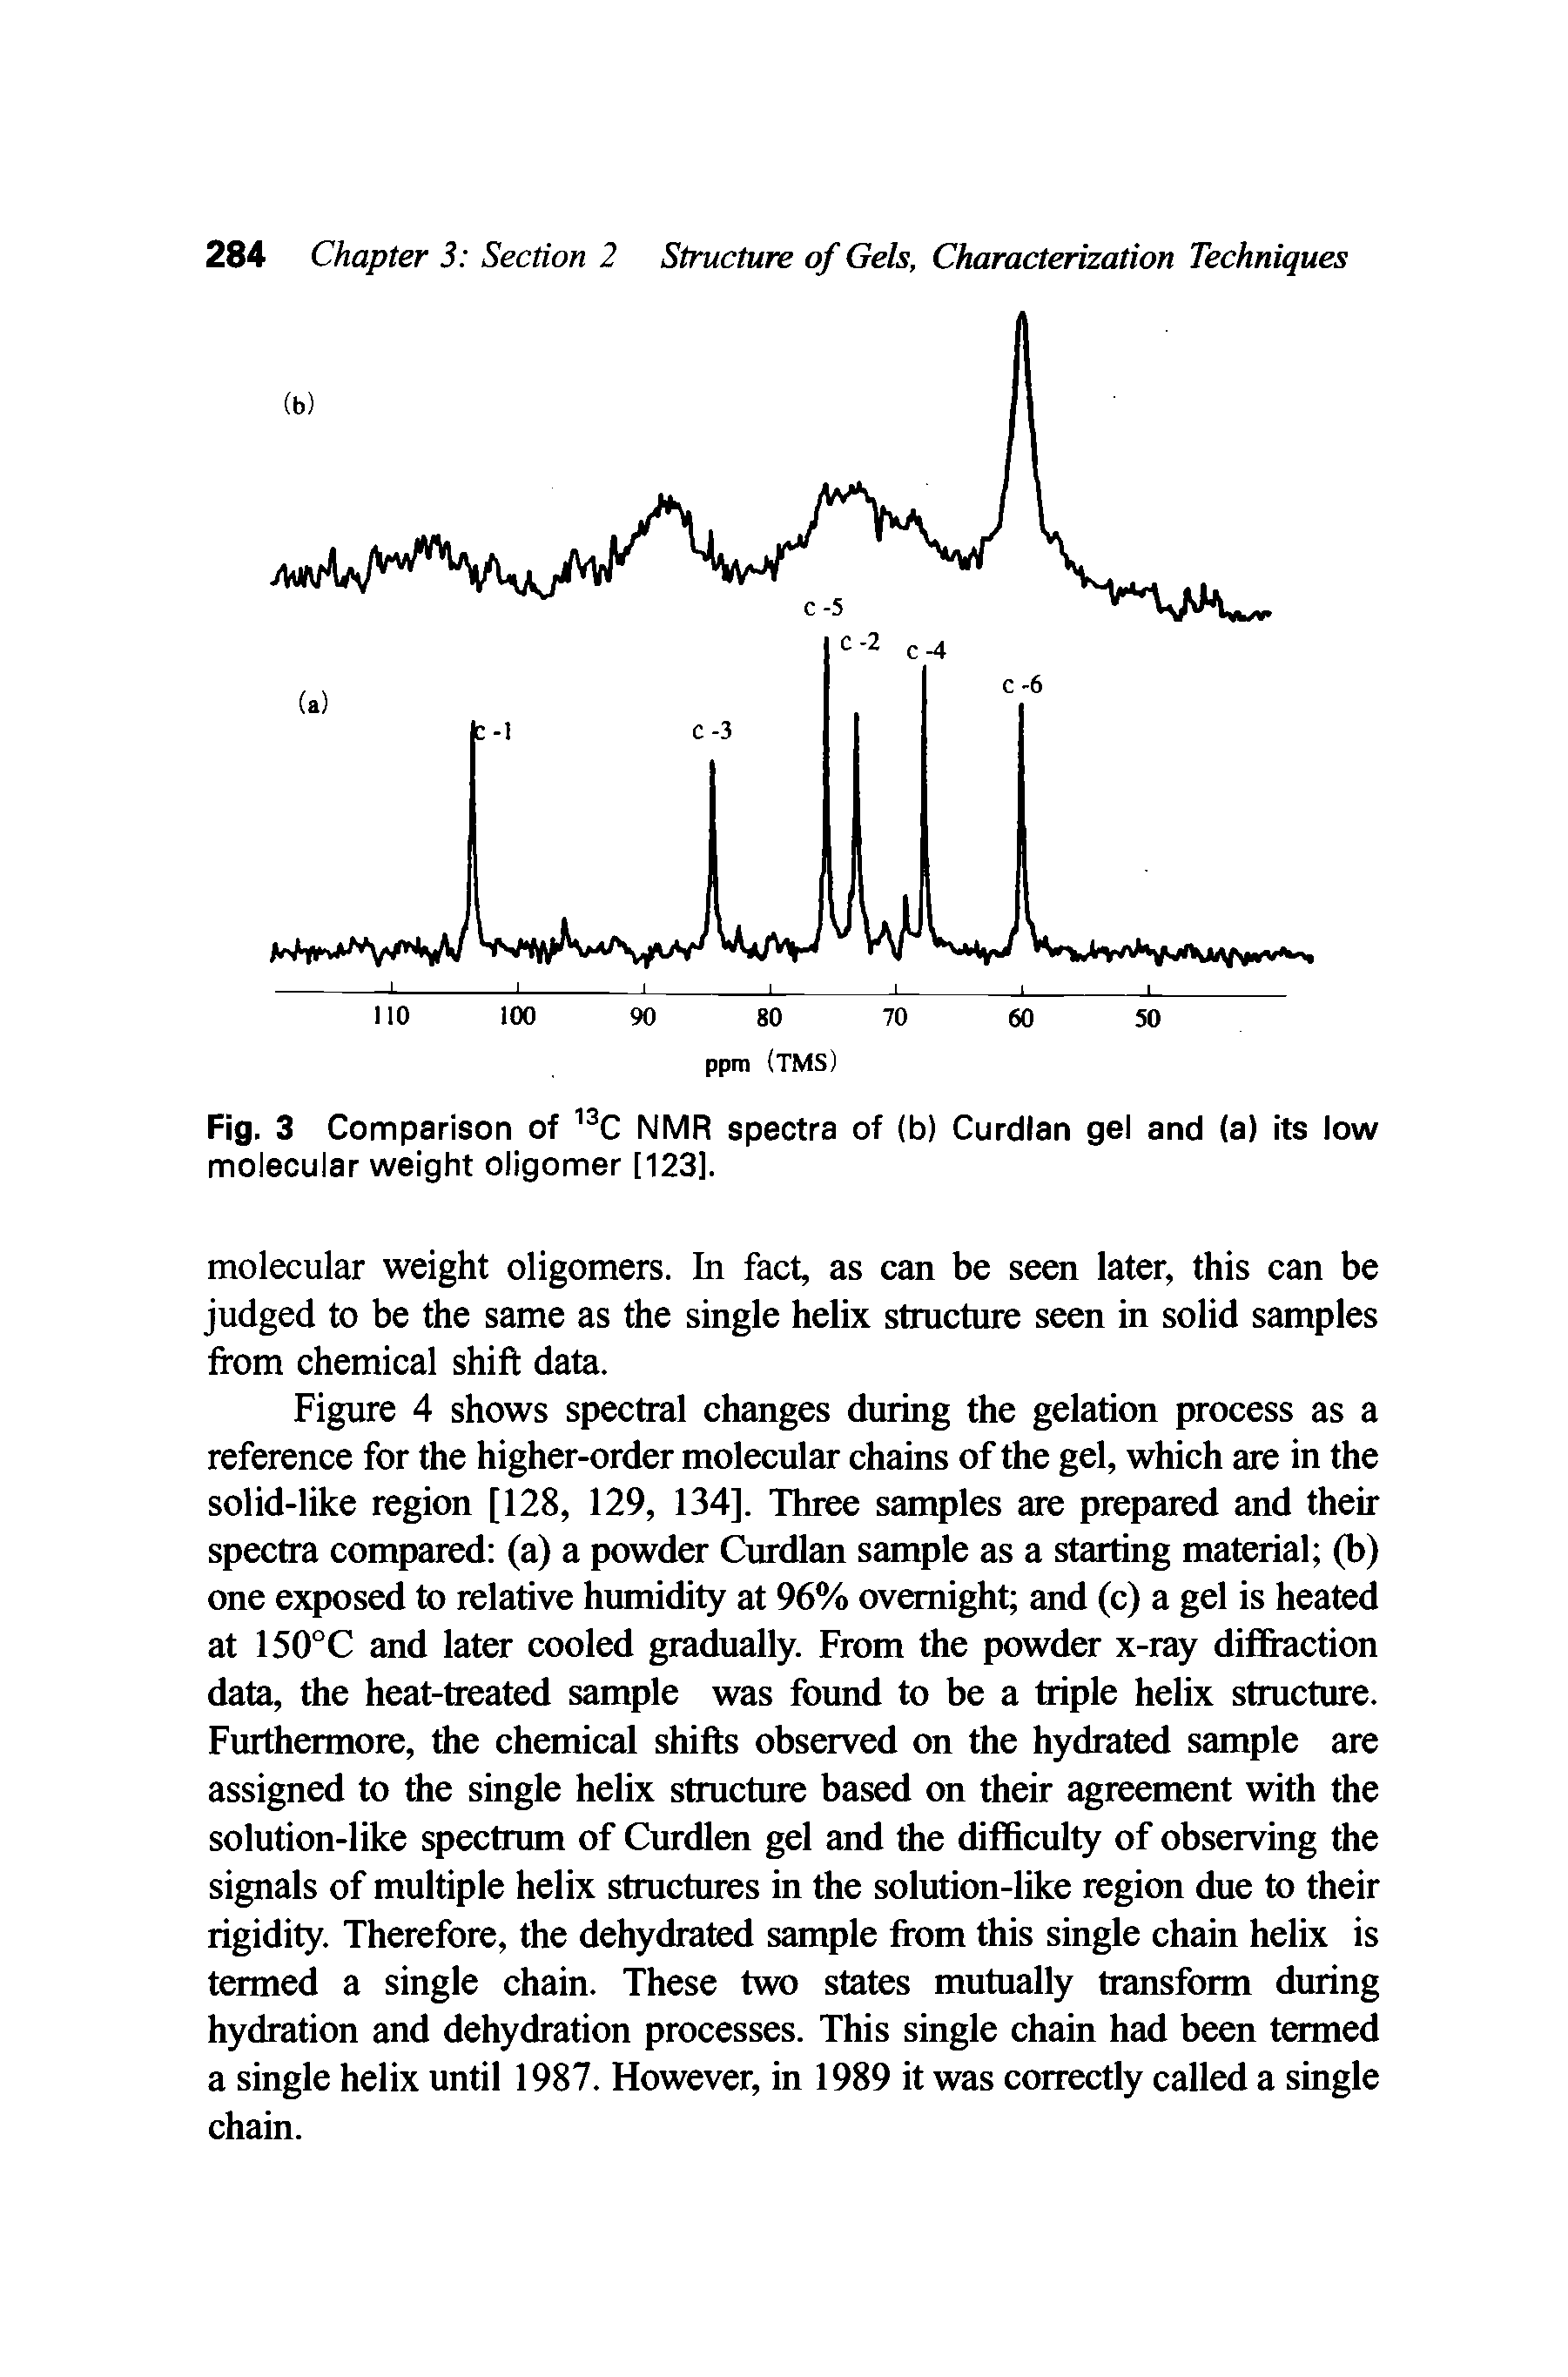 Fig. 3 Comparison of NMR spectra of (b) Curdlan gel and (a) its low molecular weight oligomer [123].